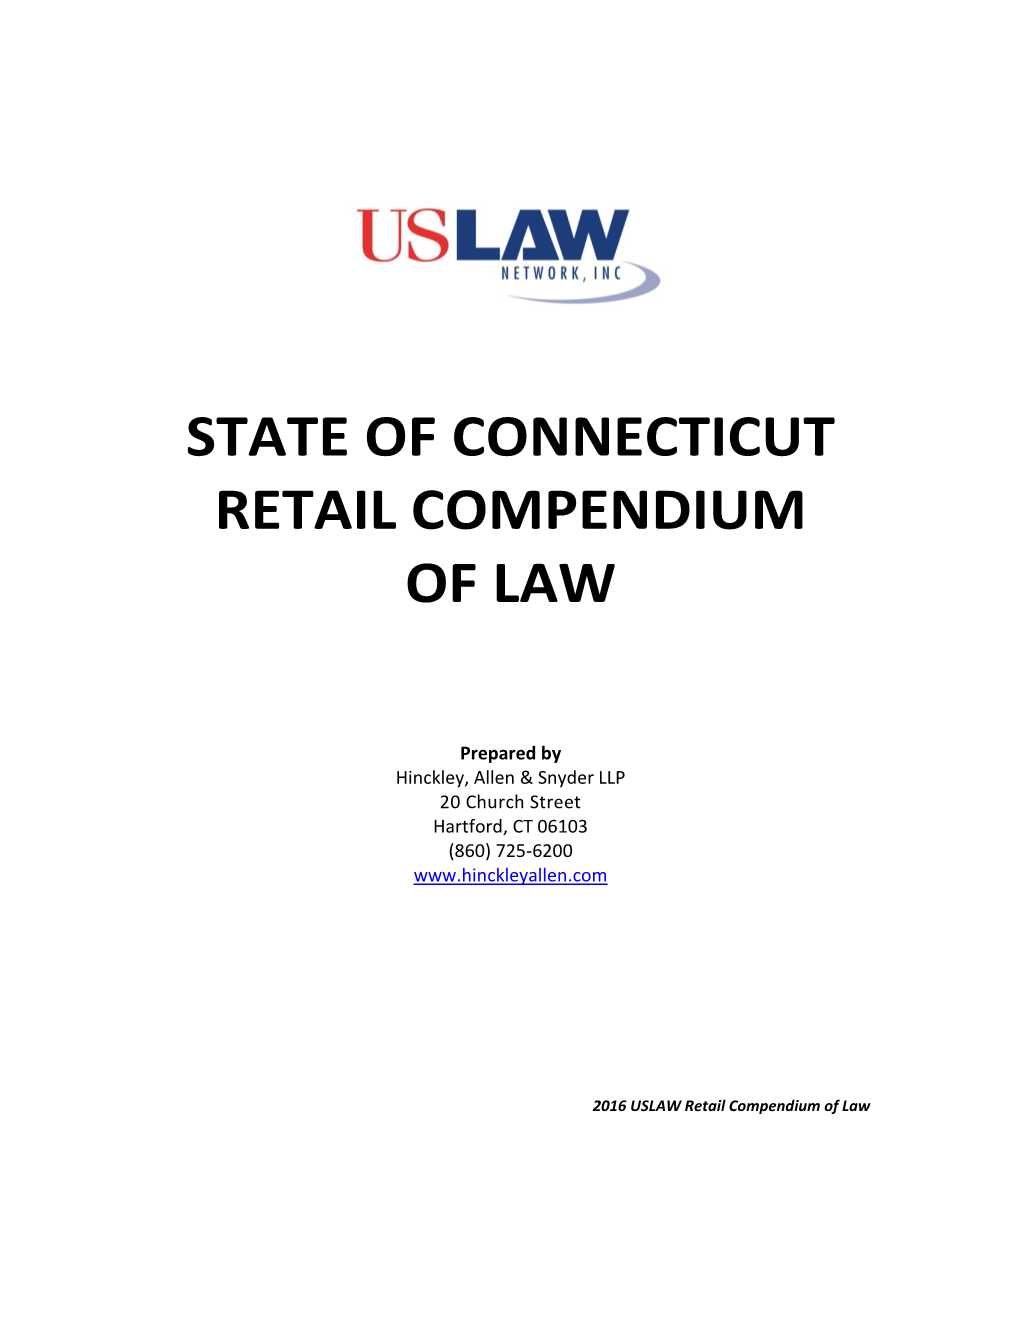 State of Connecticut Retail Compendium of Law